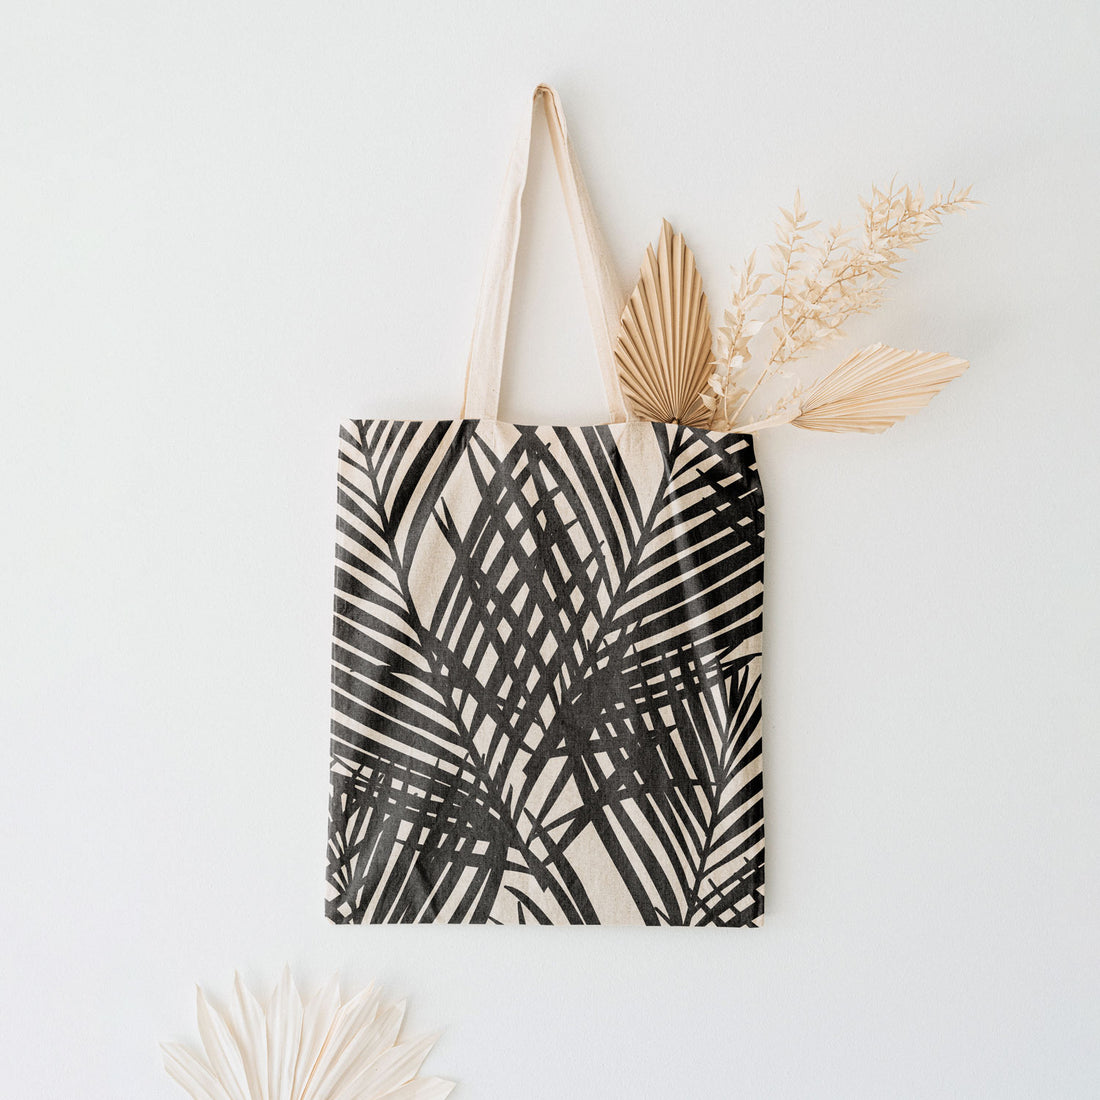 elegant tote bag with black and white palm leaf print